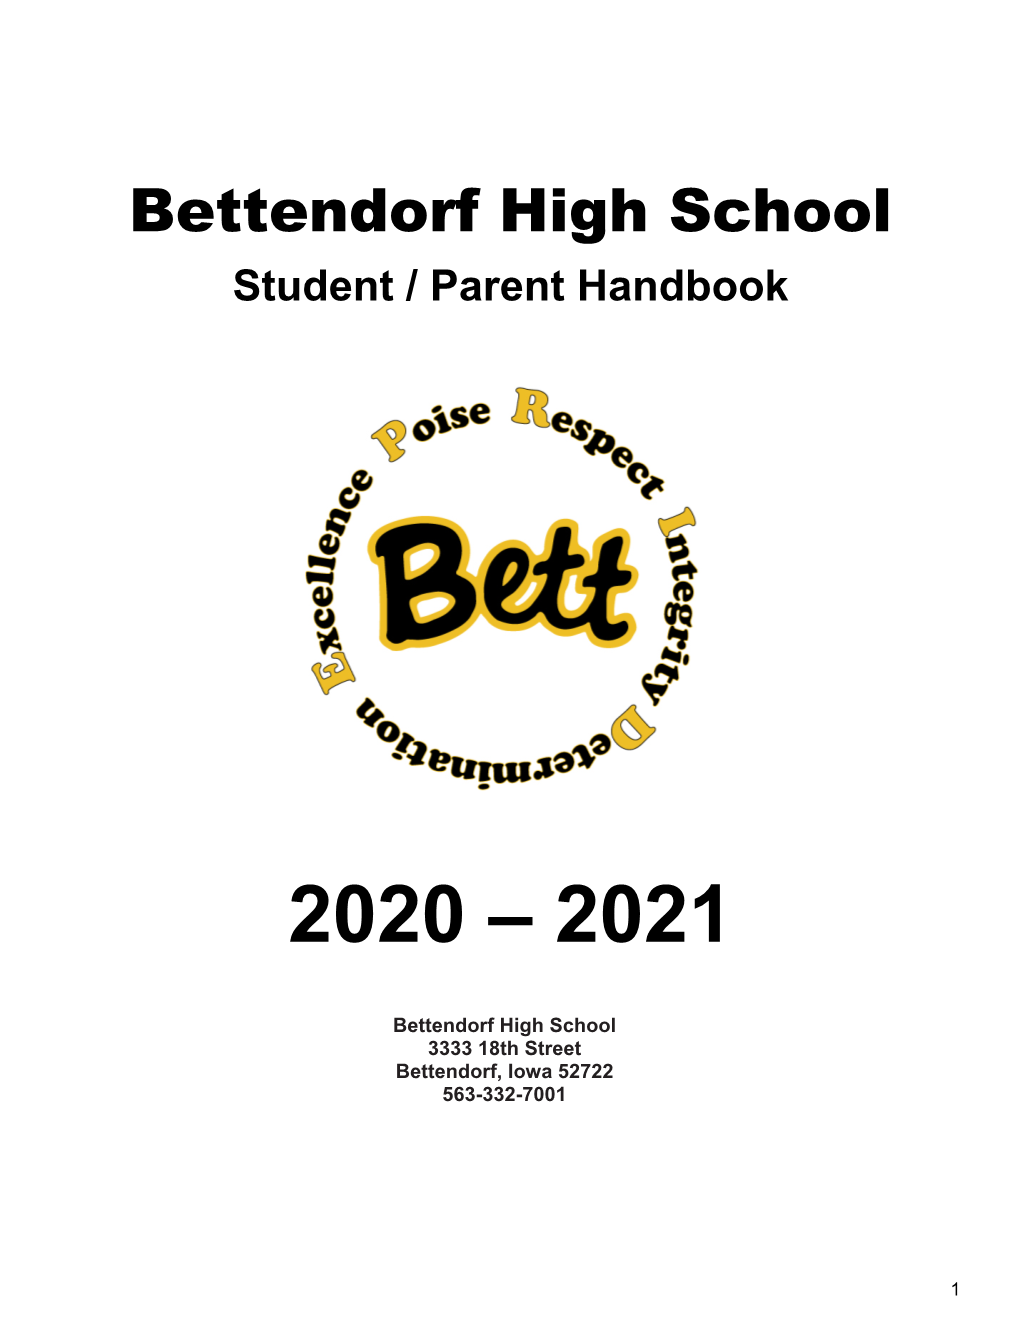 2020-2021 Student/Parent Handbook